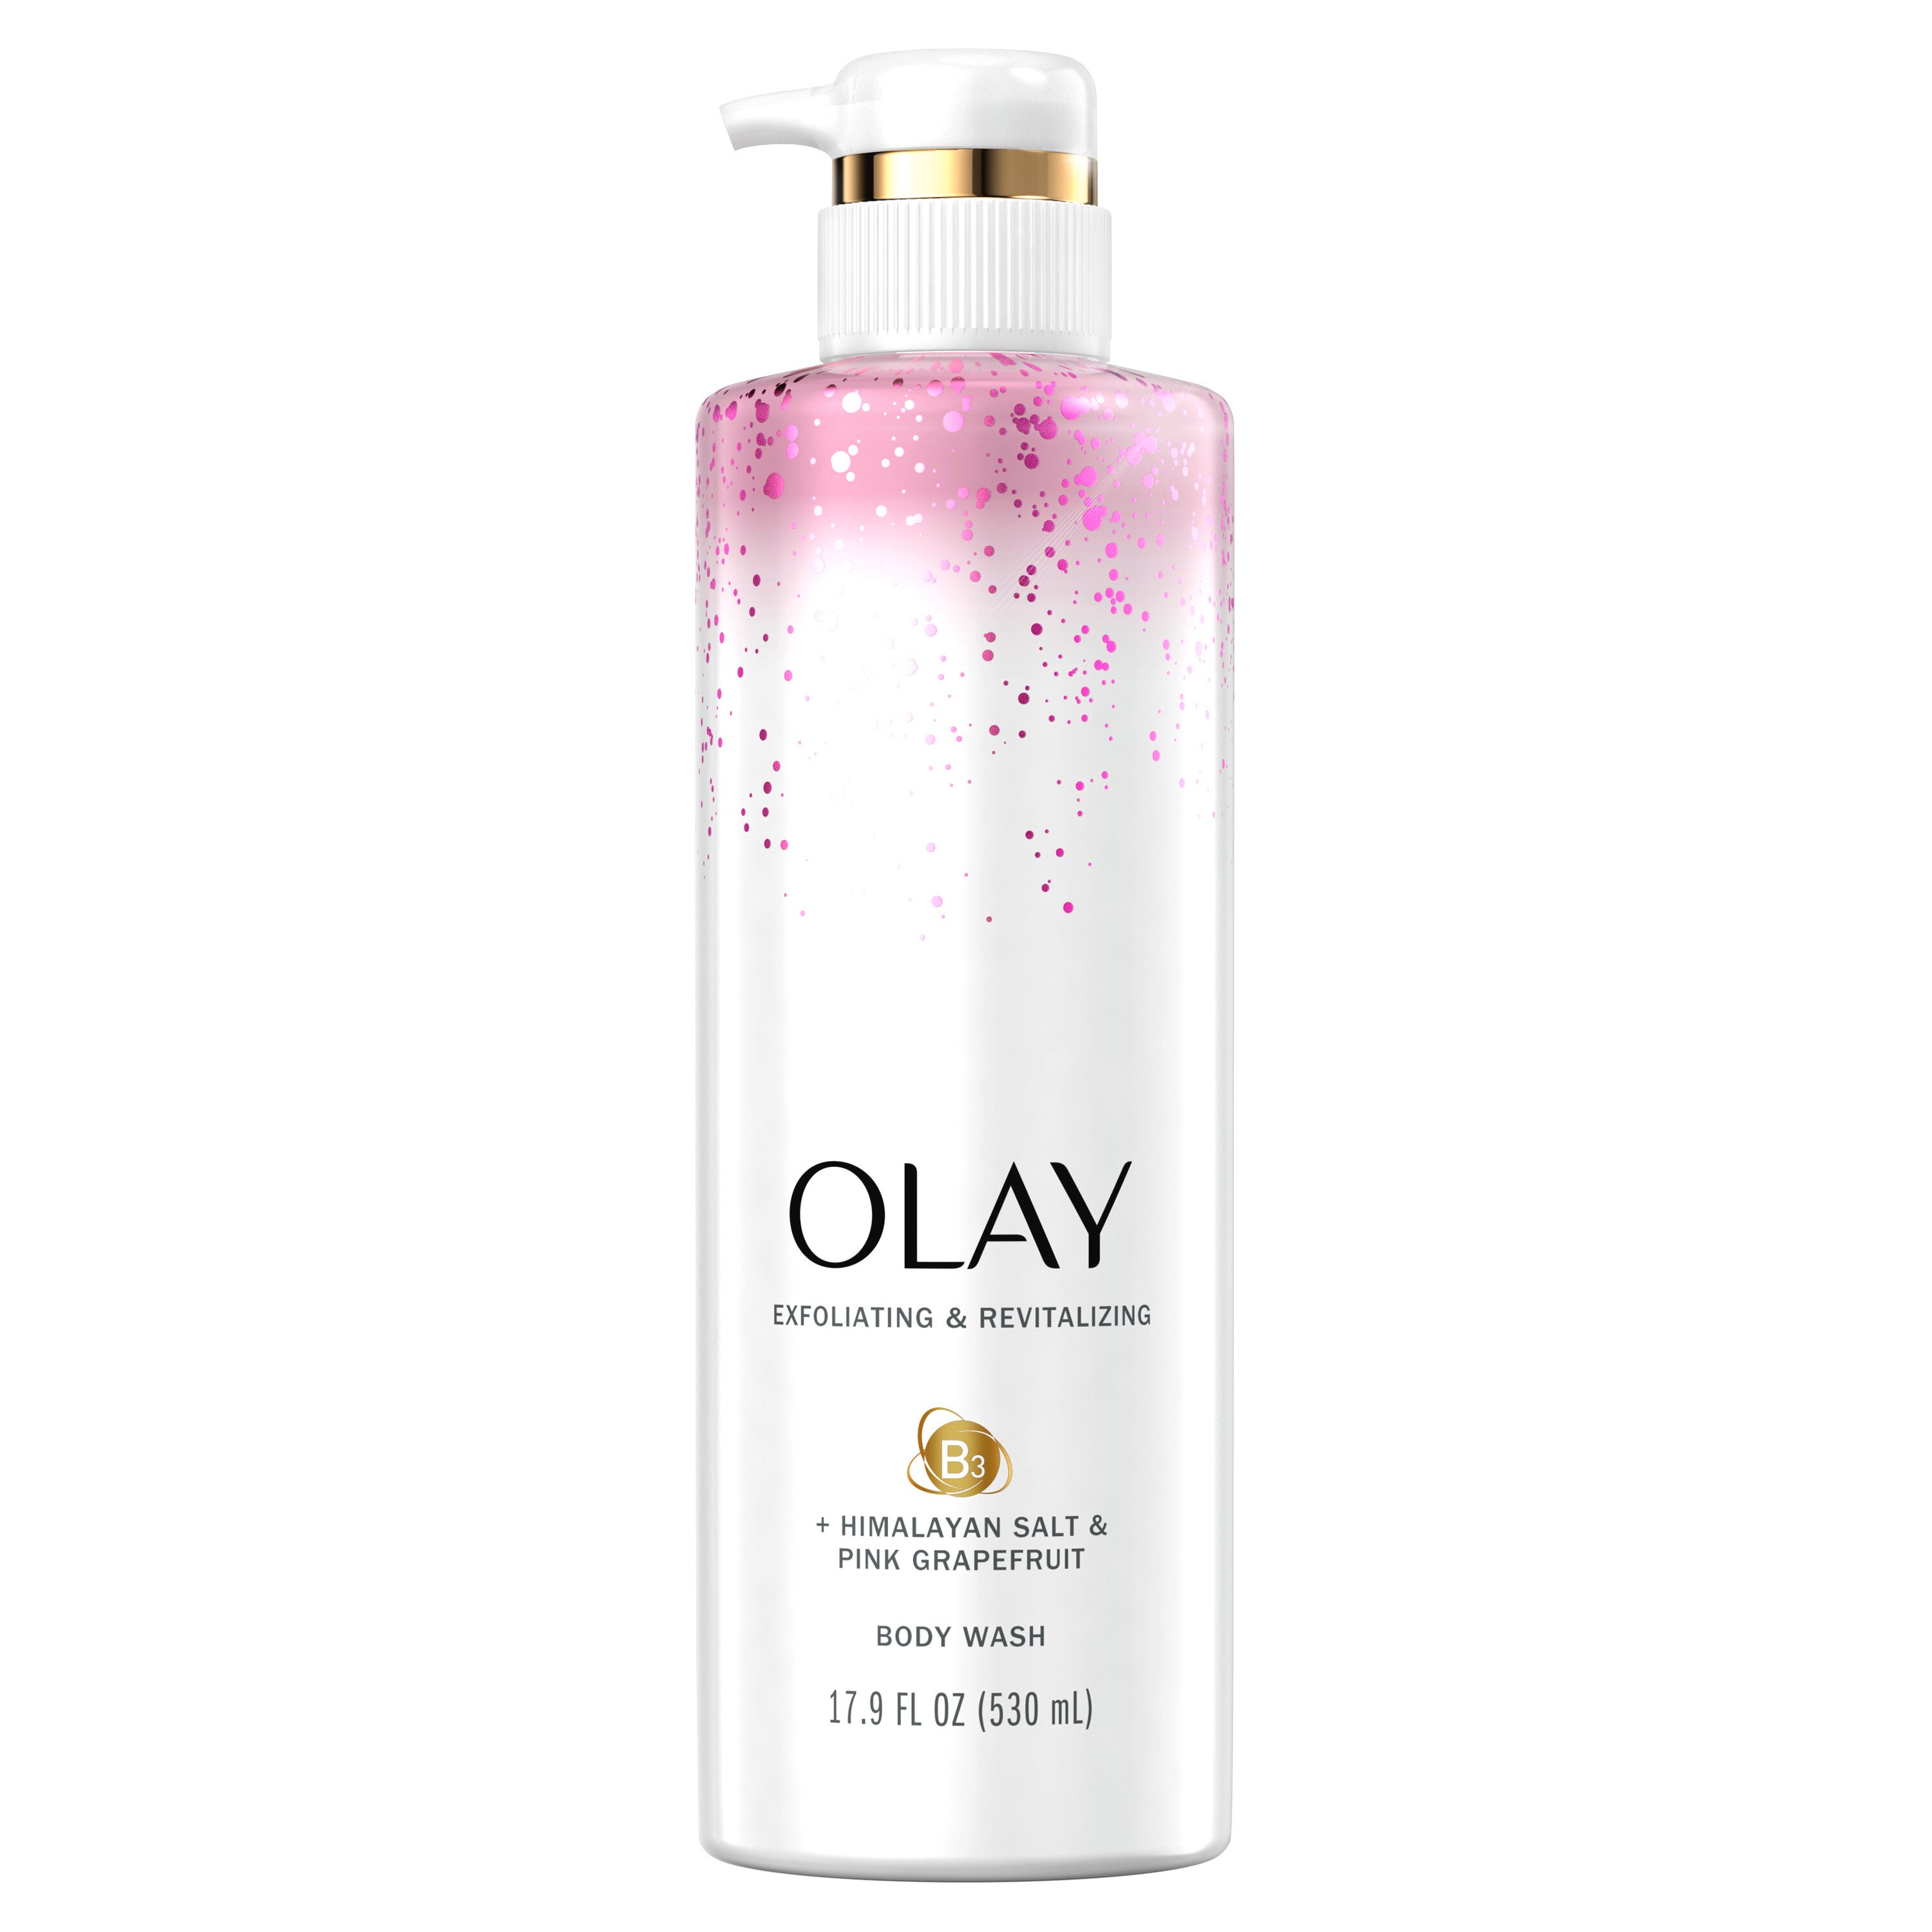 Olay Exfoliating & Revitalizing Body Wash with Himalayan Salt, Pink Grapefruit, and Vitamin B3, 17.9 OZ